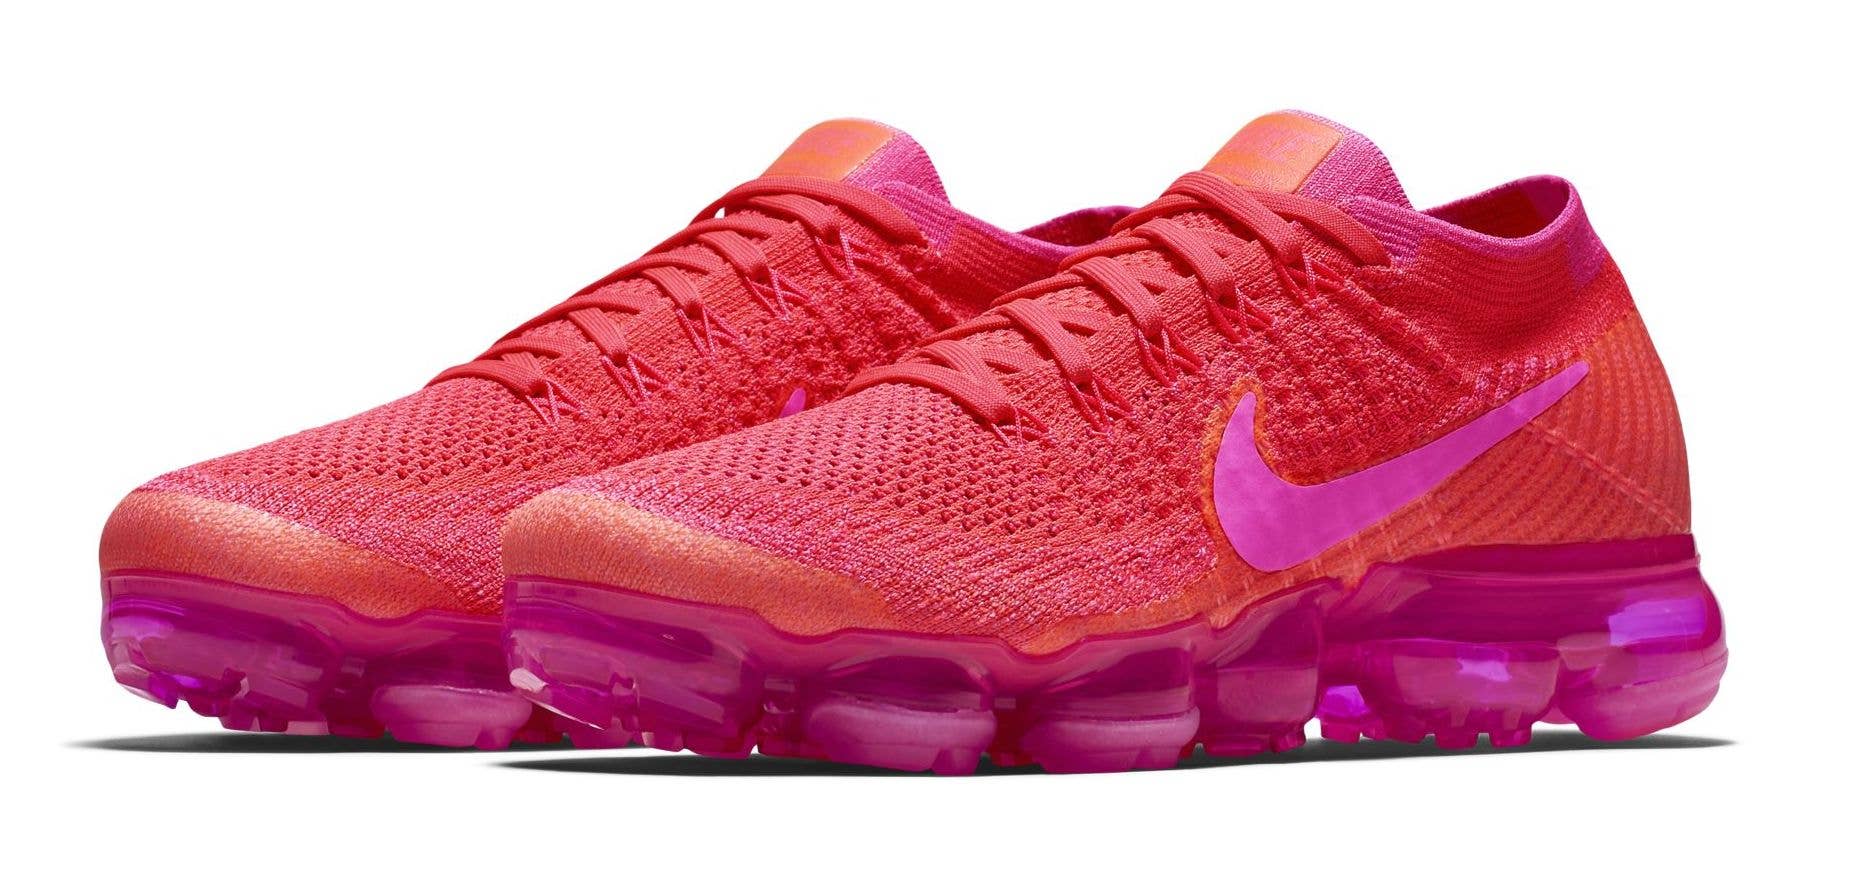 Nike Air Vapormax WMNS Bright Crimson/Hot Pink (Pair)